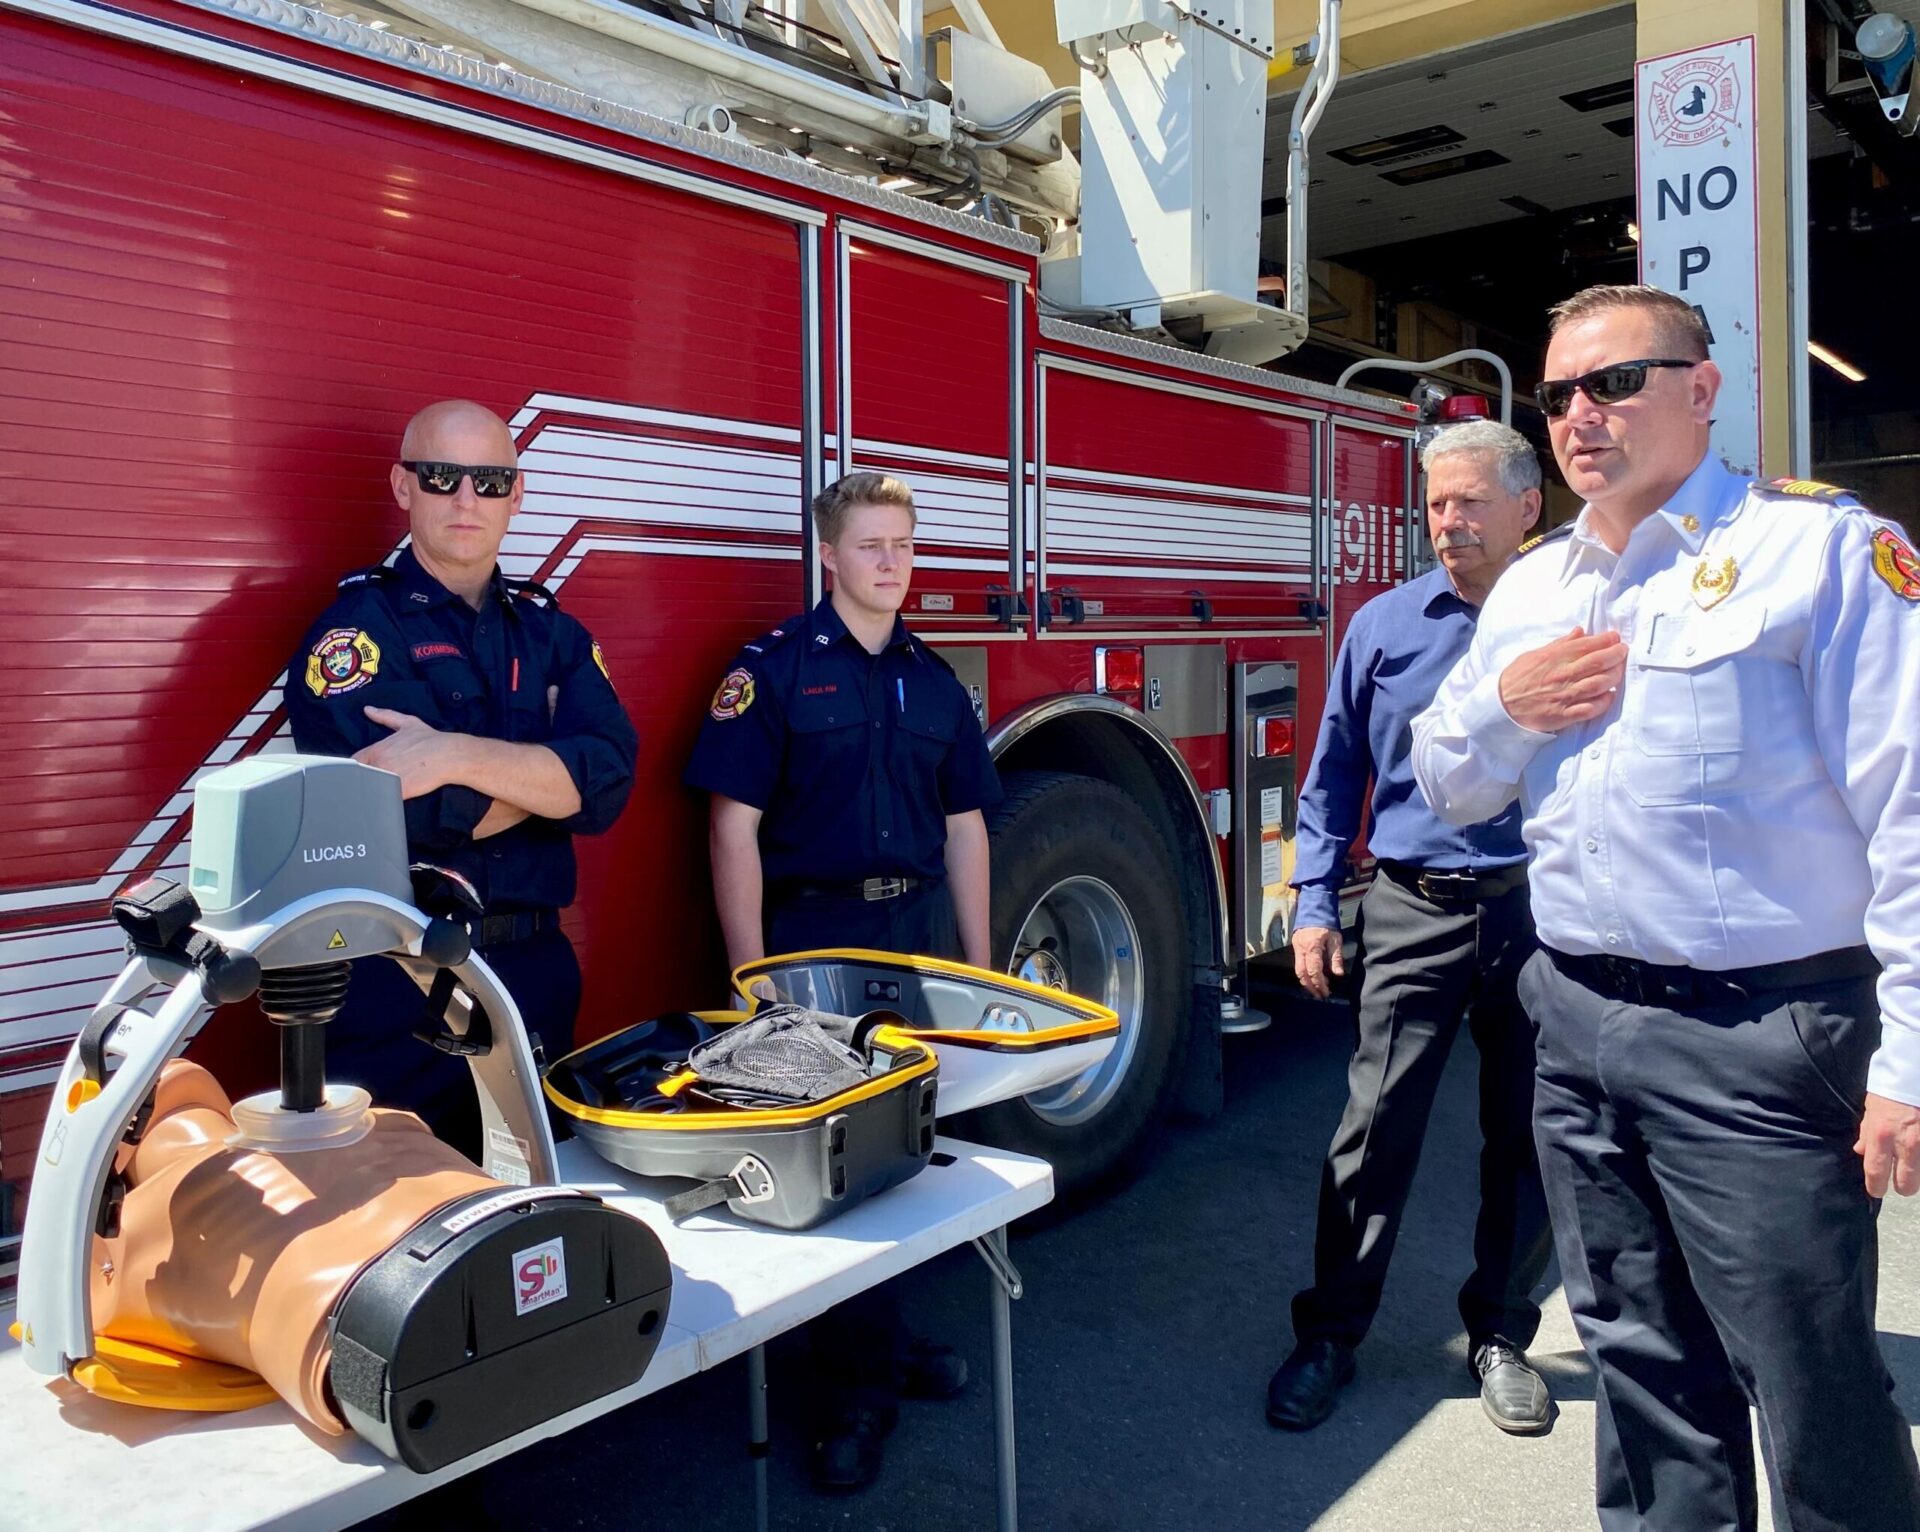 New Lifesaving Equipment for the Prince Rupert Fire Department